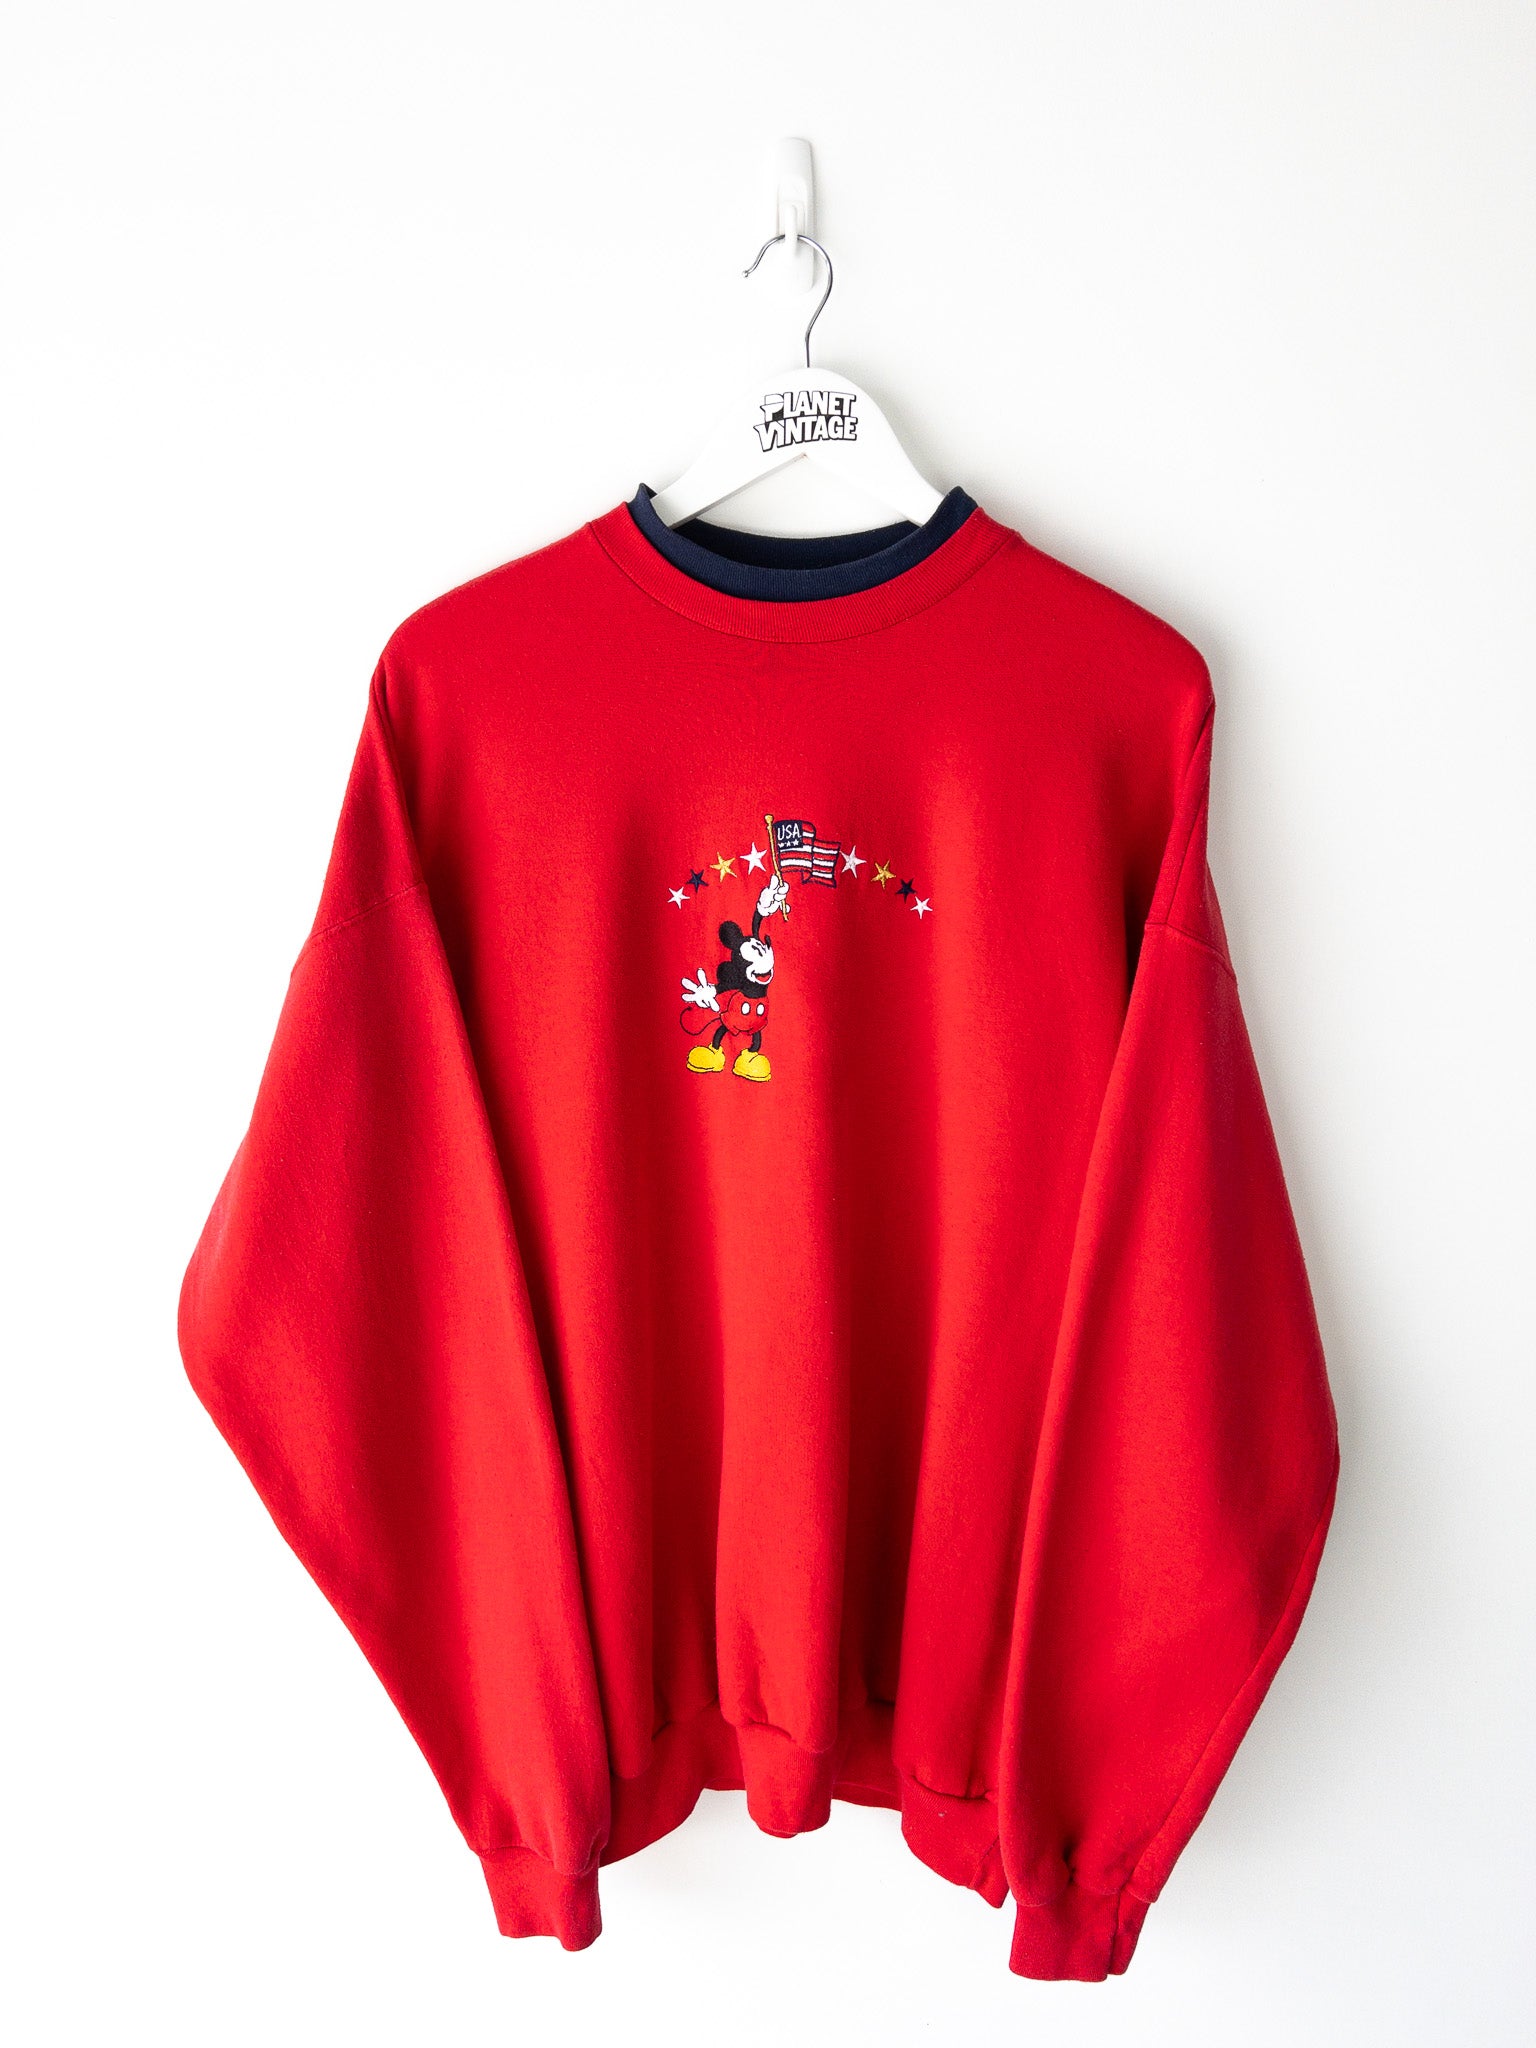 Vintage Mickey Mouse Sweatshirt (XL)